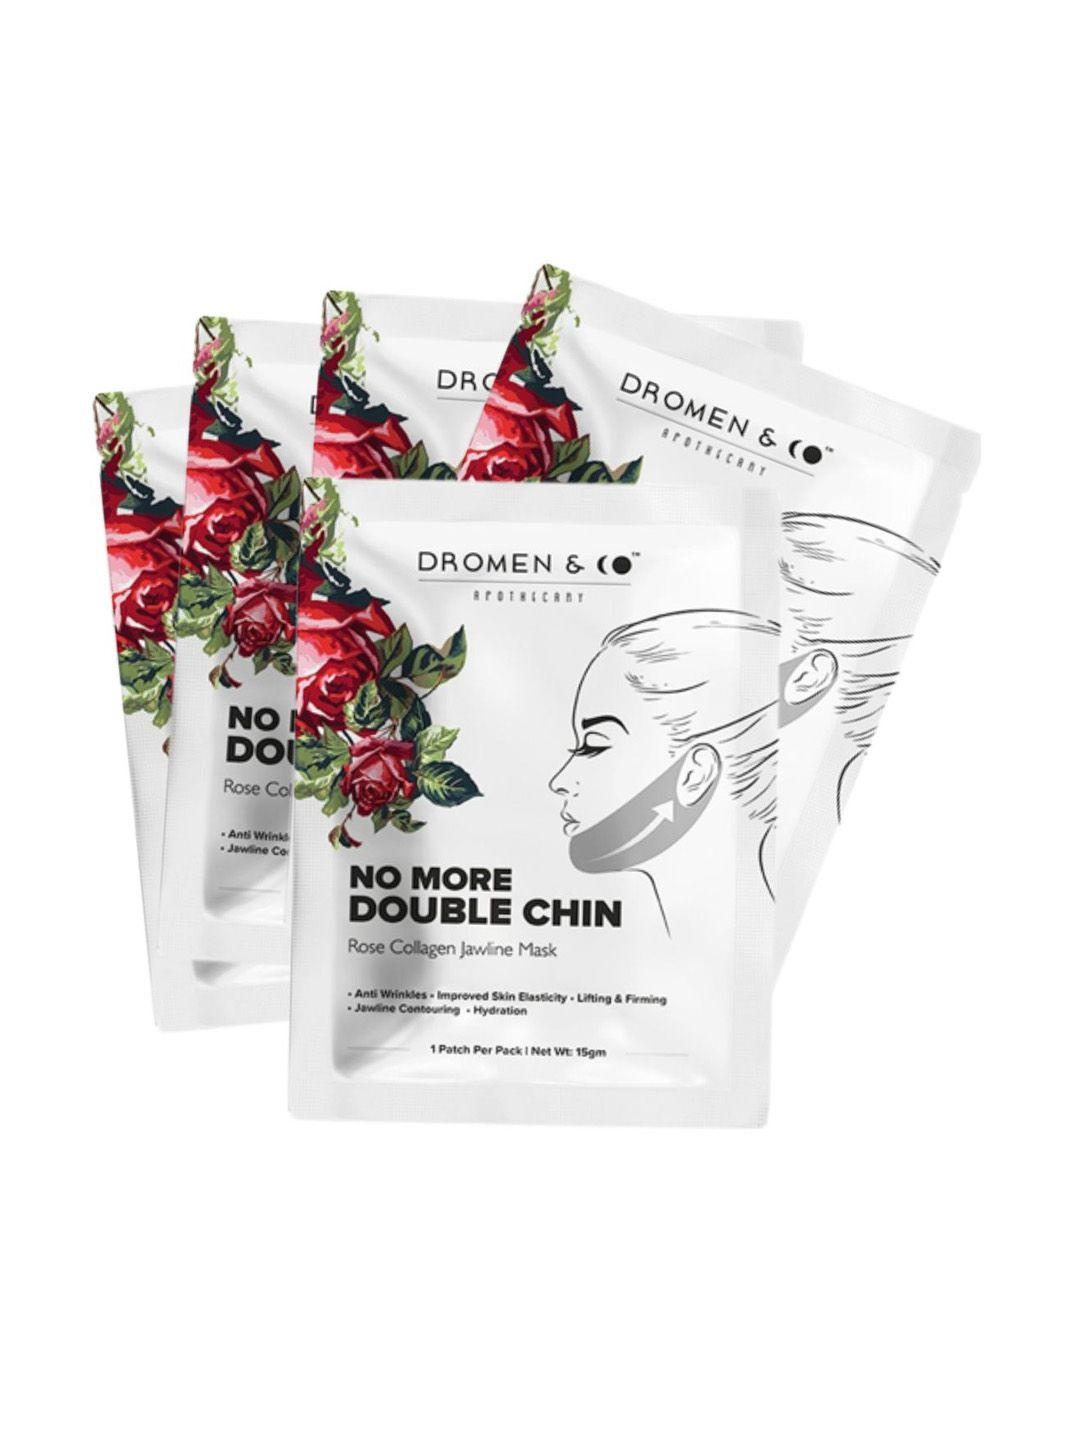 dromen & co set of 5 rose collagen v-shaped jawline slimming mask for double chin-15g each